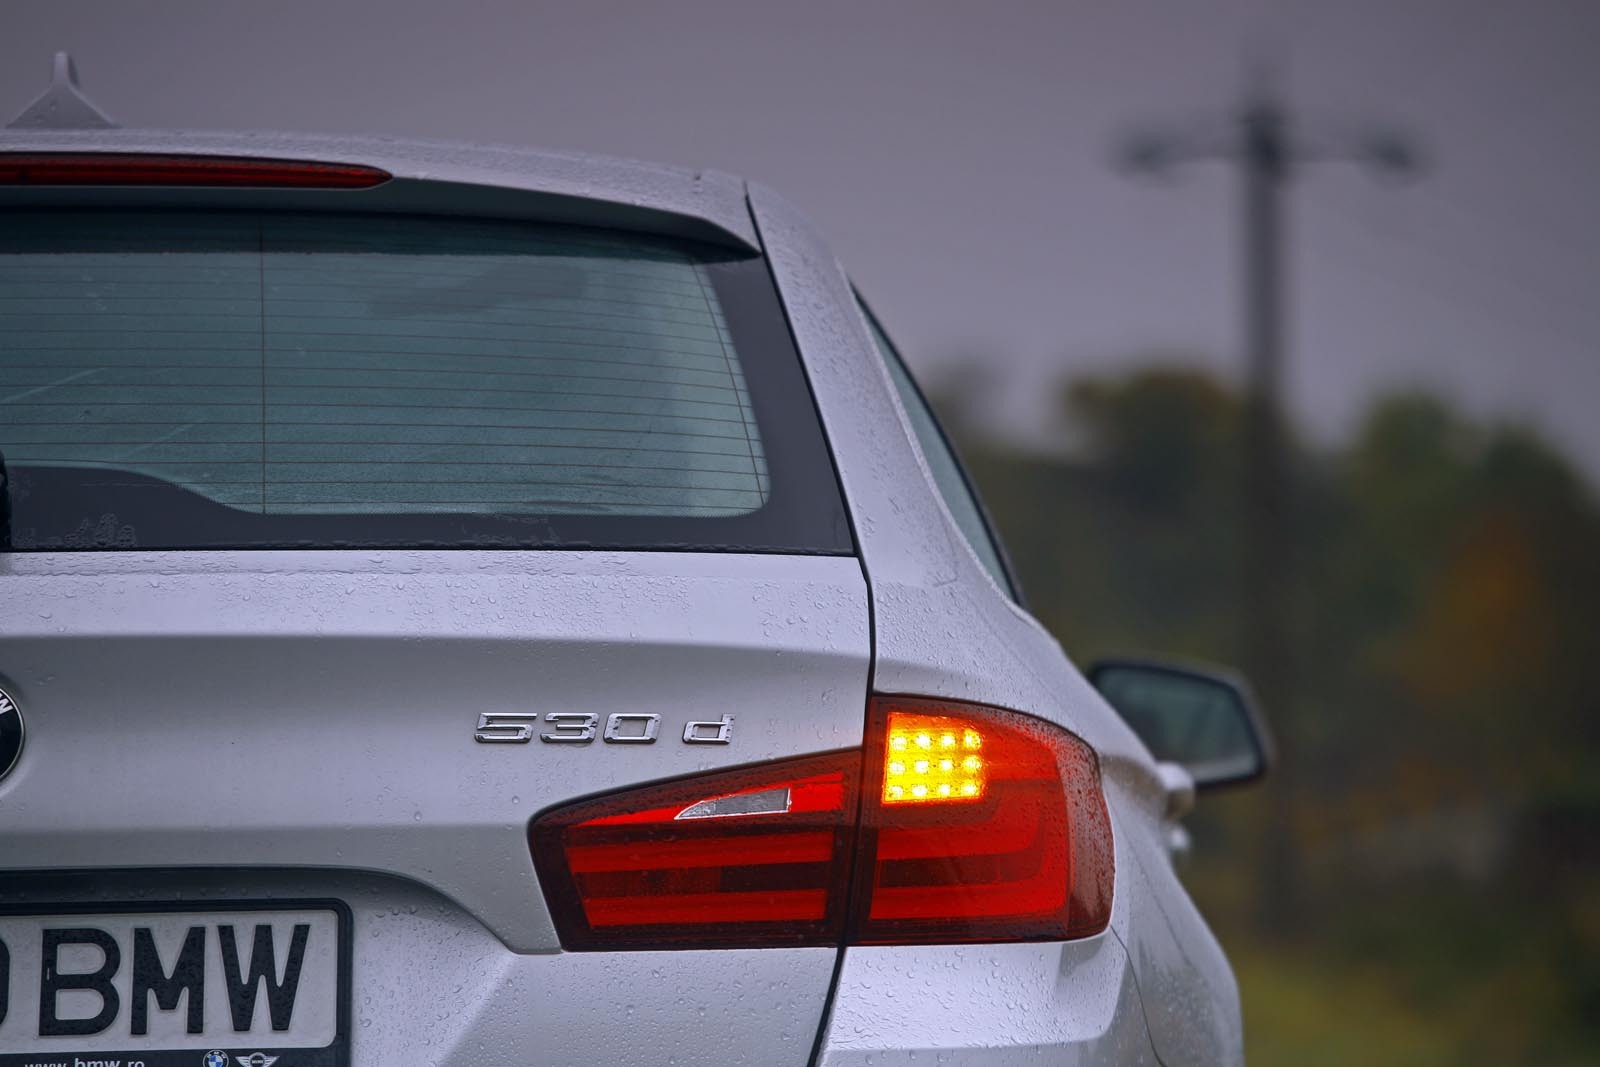 Consum BMW 530d Touring in test: urban - 9,3 litri/100 km, extraurban - 7,6 litri/100 km